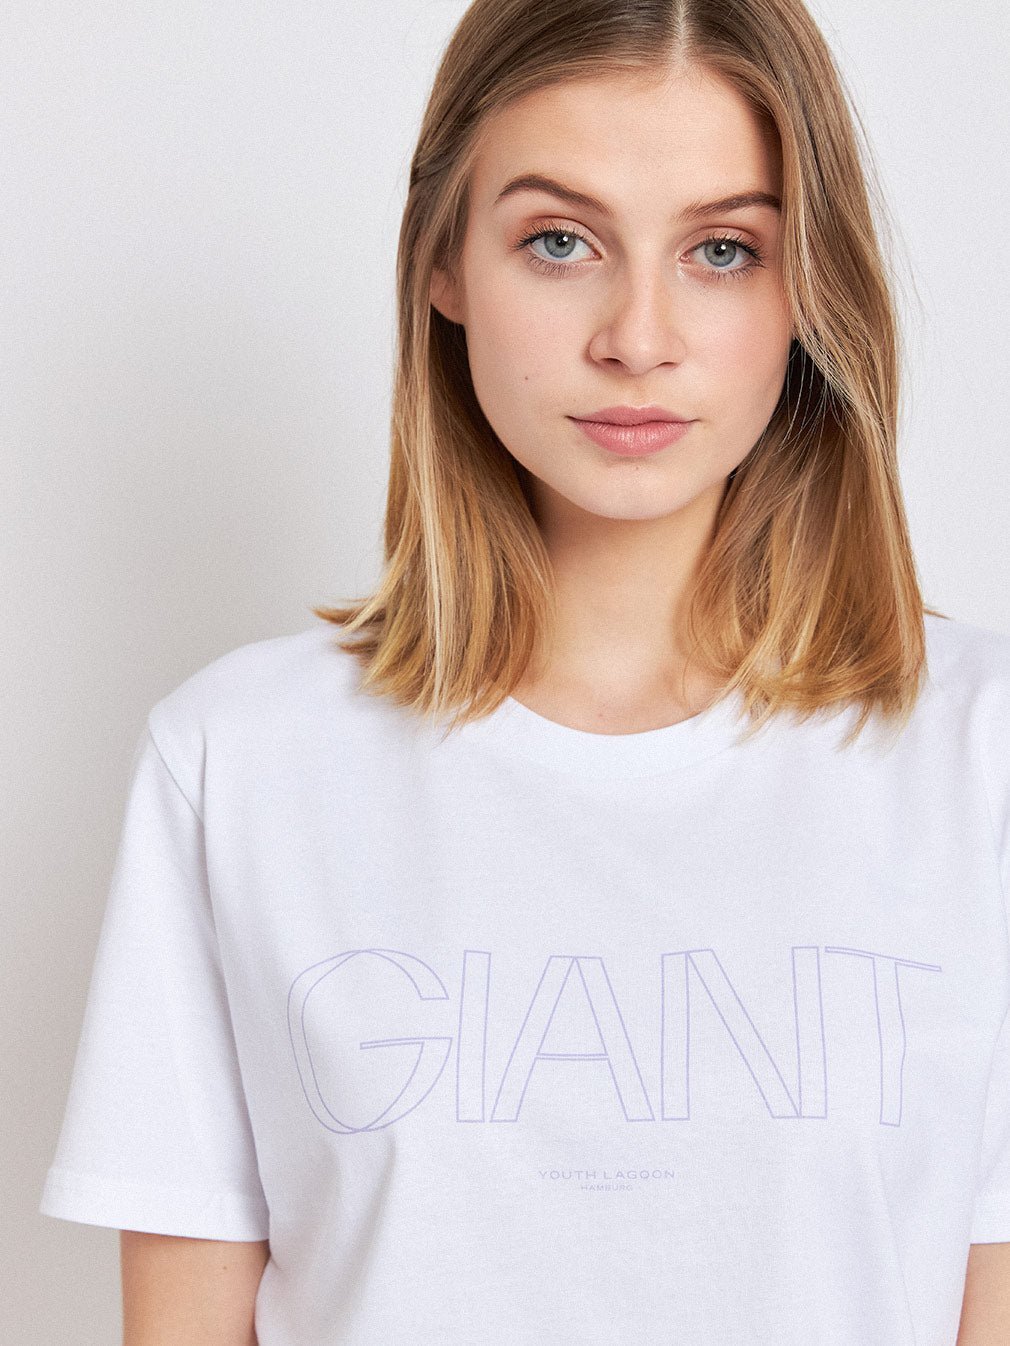 Giant — Women's T-Shirt - Youth Lagoon